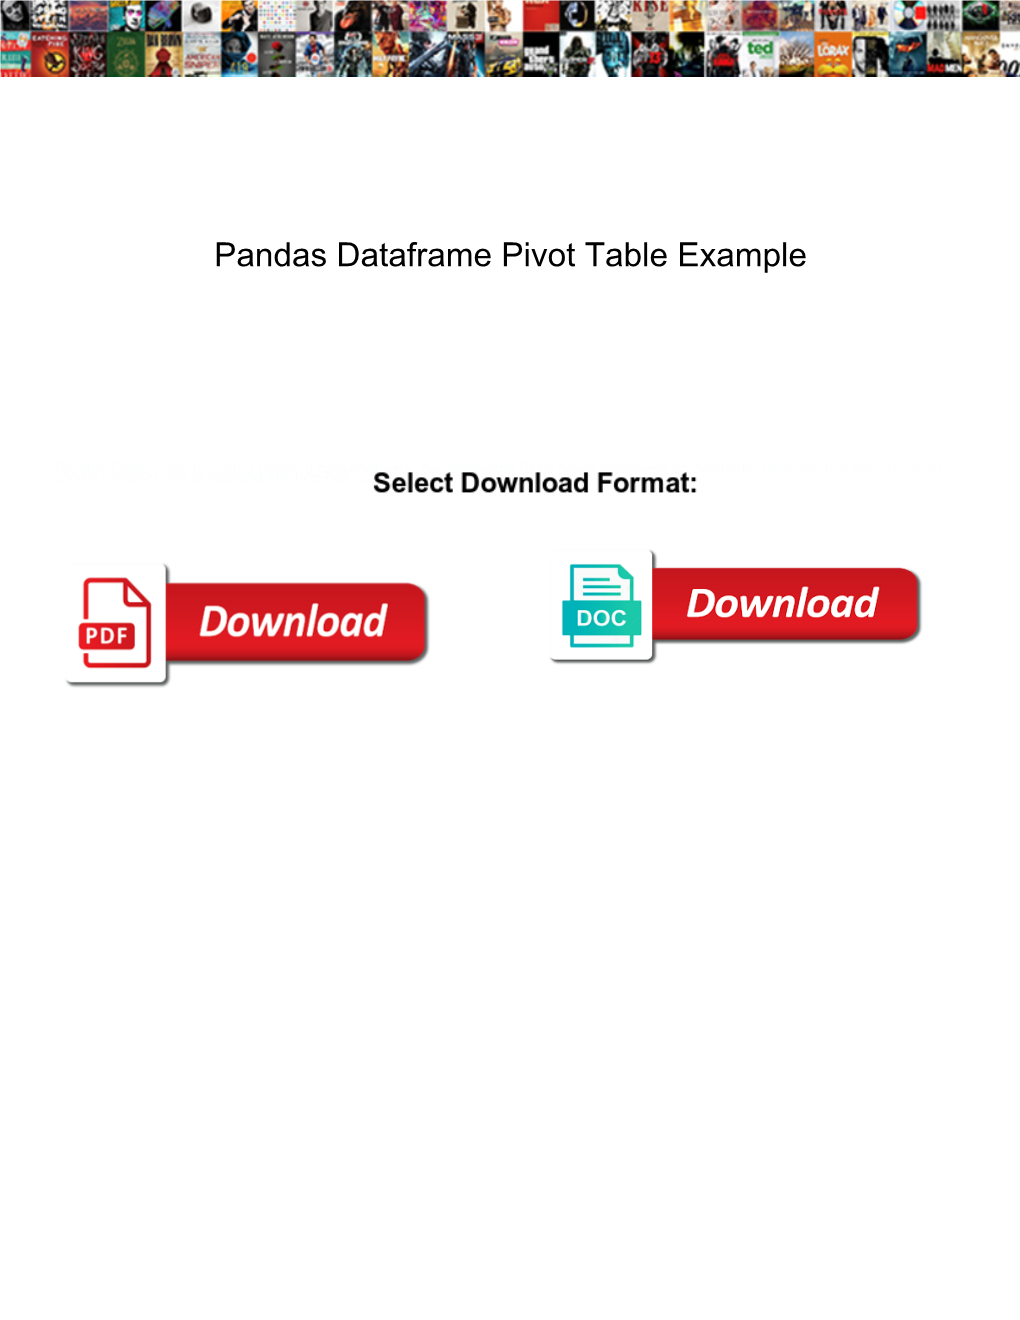 Pandas Dataframe Pivot Table Example